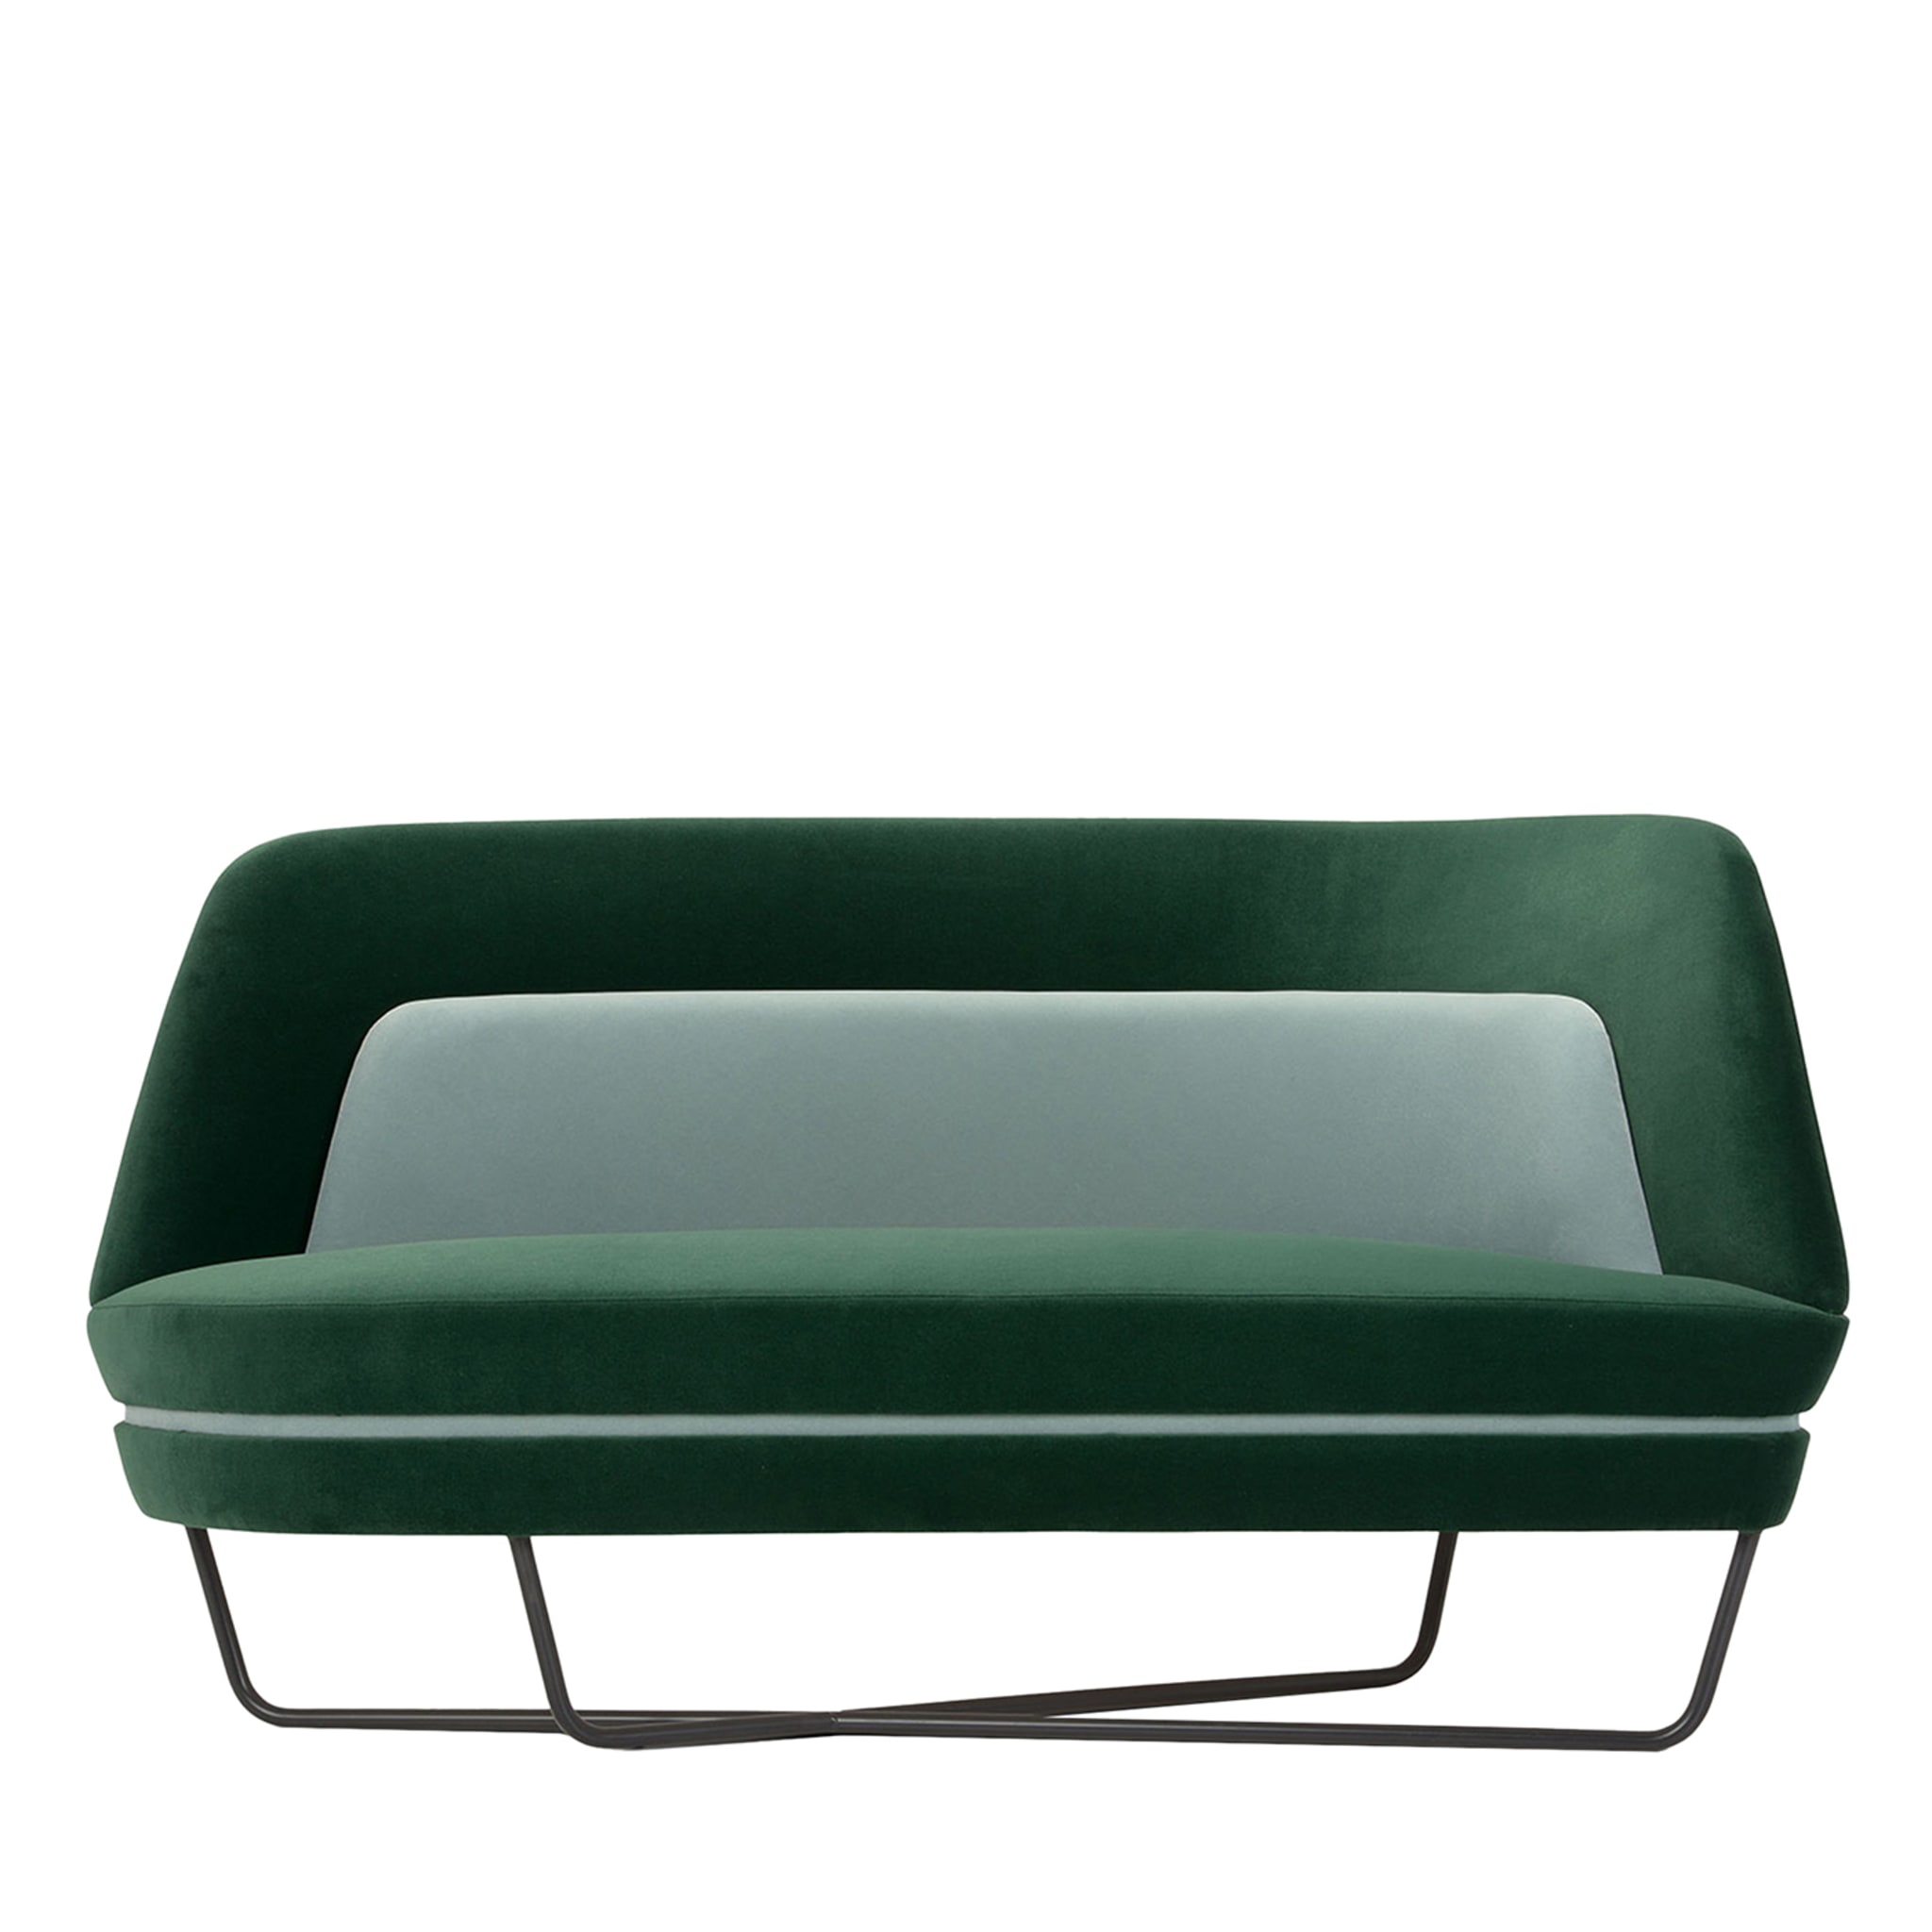 Bixib Green Sofa by Luca Alessandrini - Main view